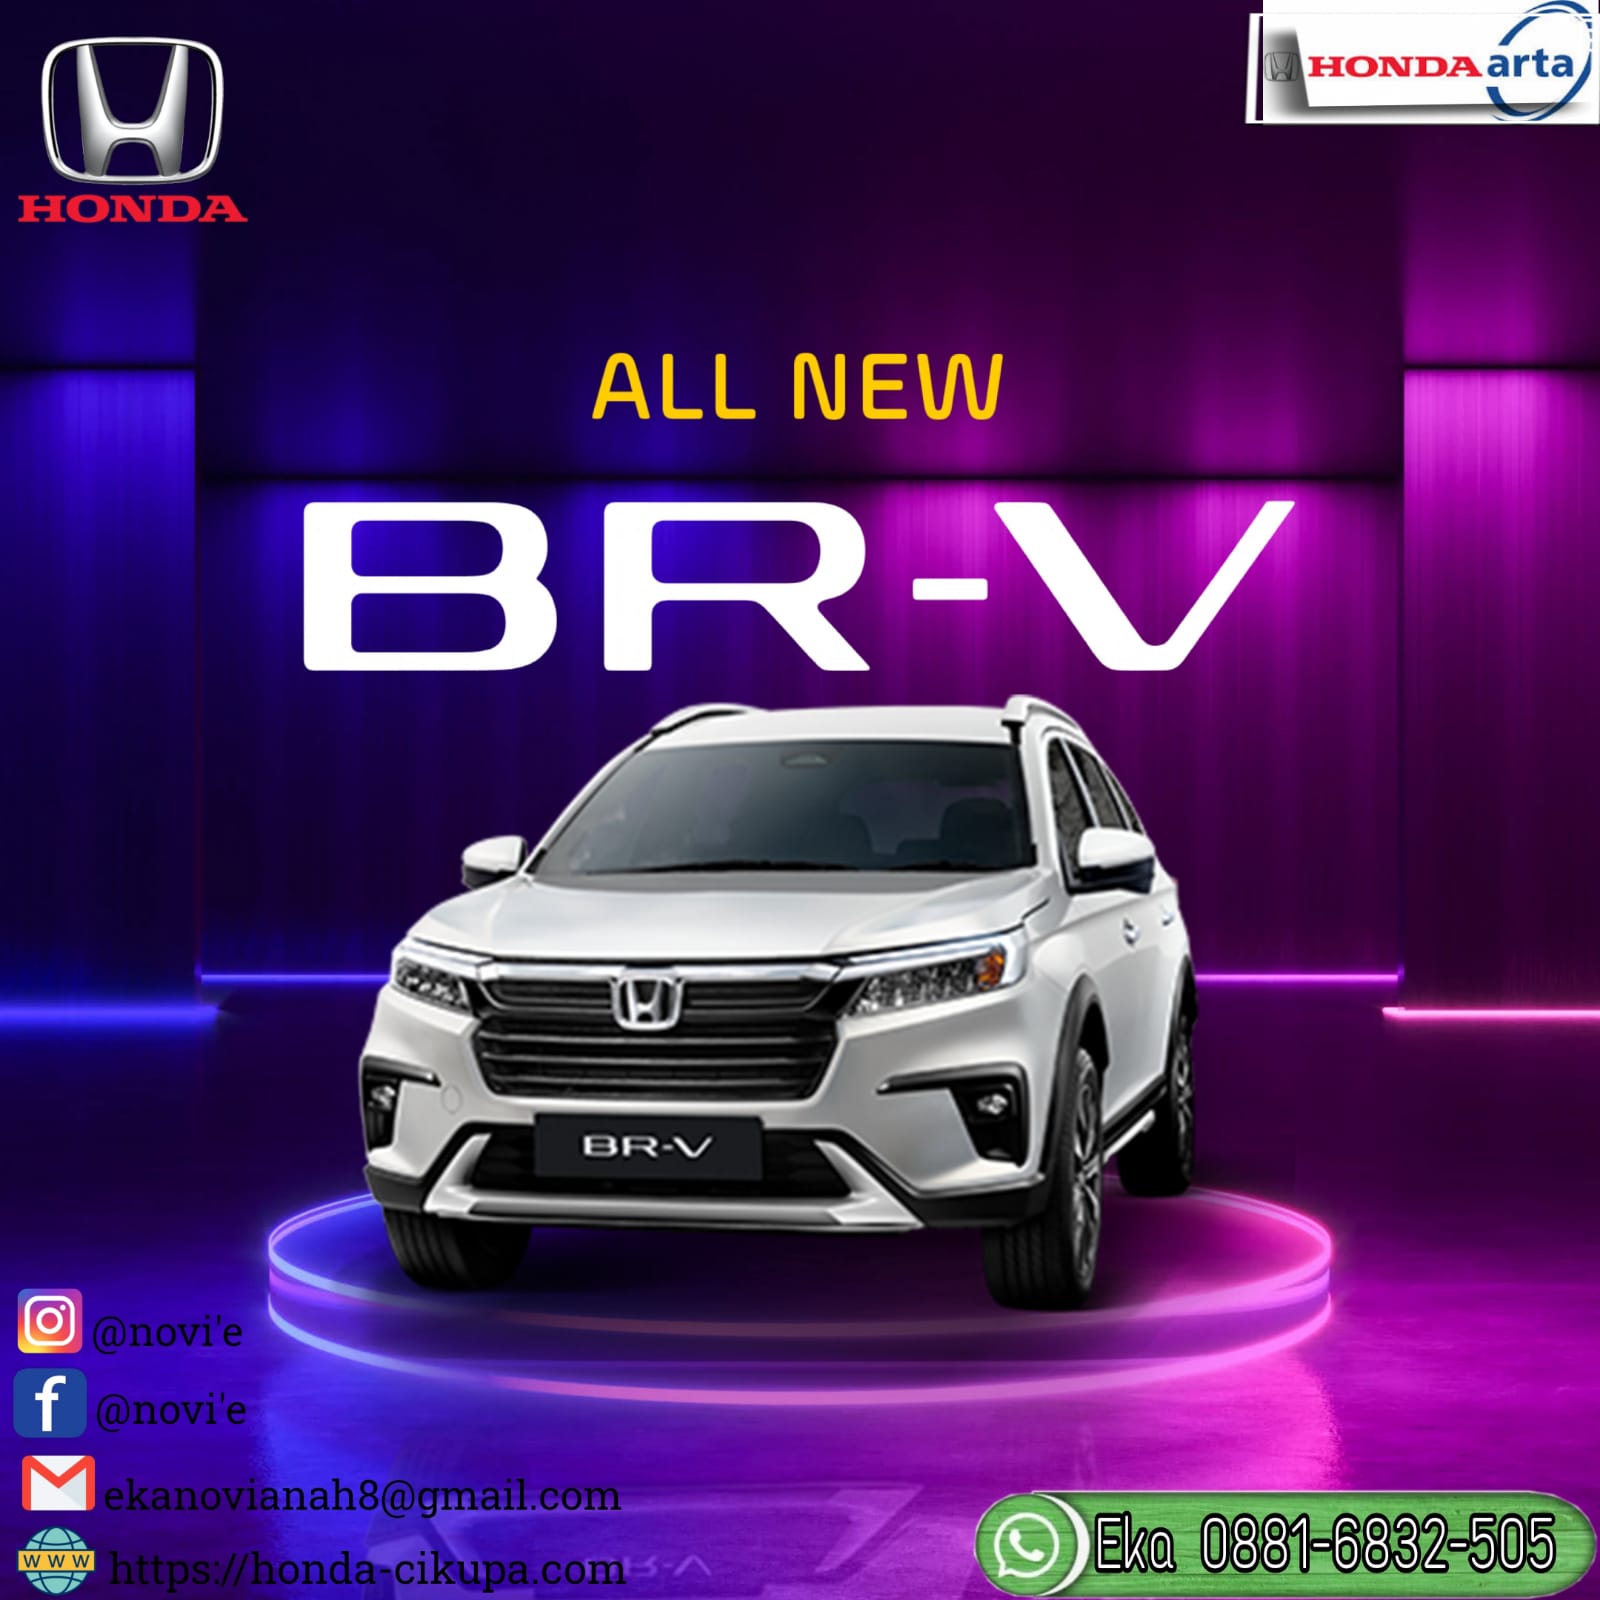 Promo All new BR-V